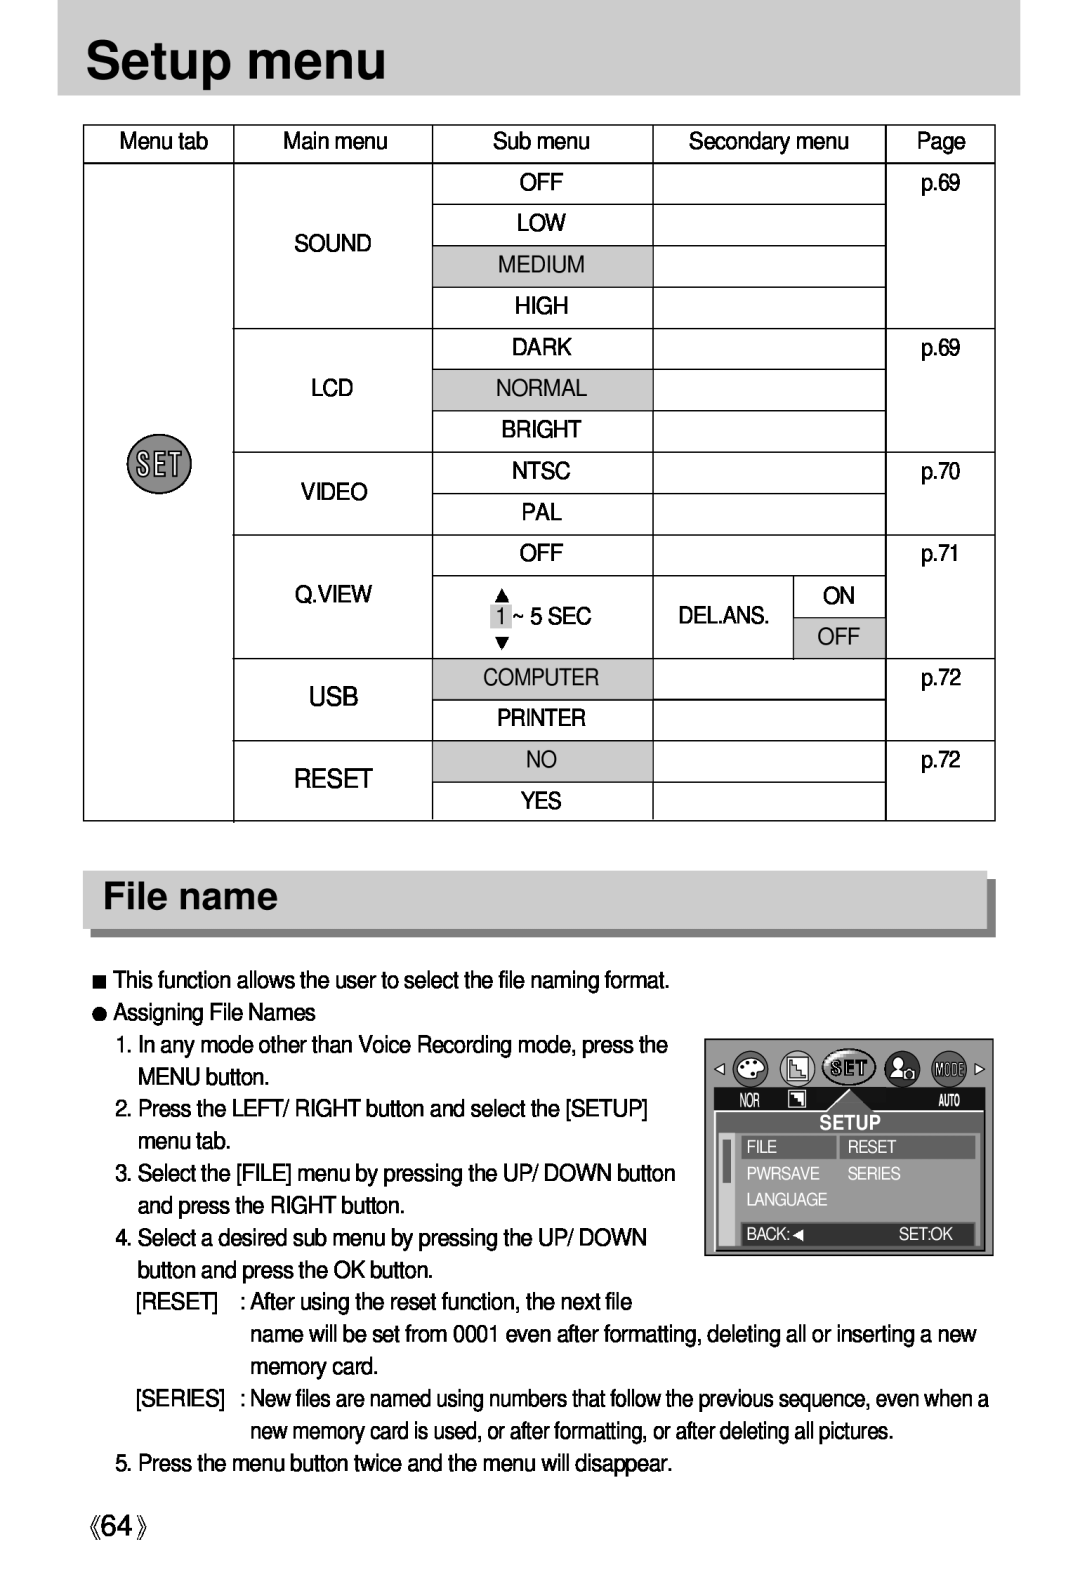 Samsung Digimax U-CA File name, Setup menu, Assigning File Names, MENU button, menu tab, and press the RIGHT button 